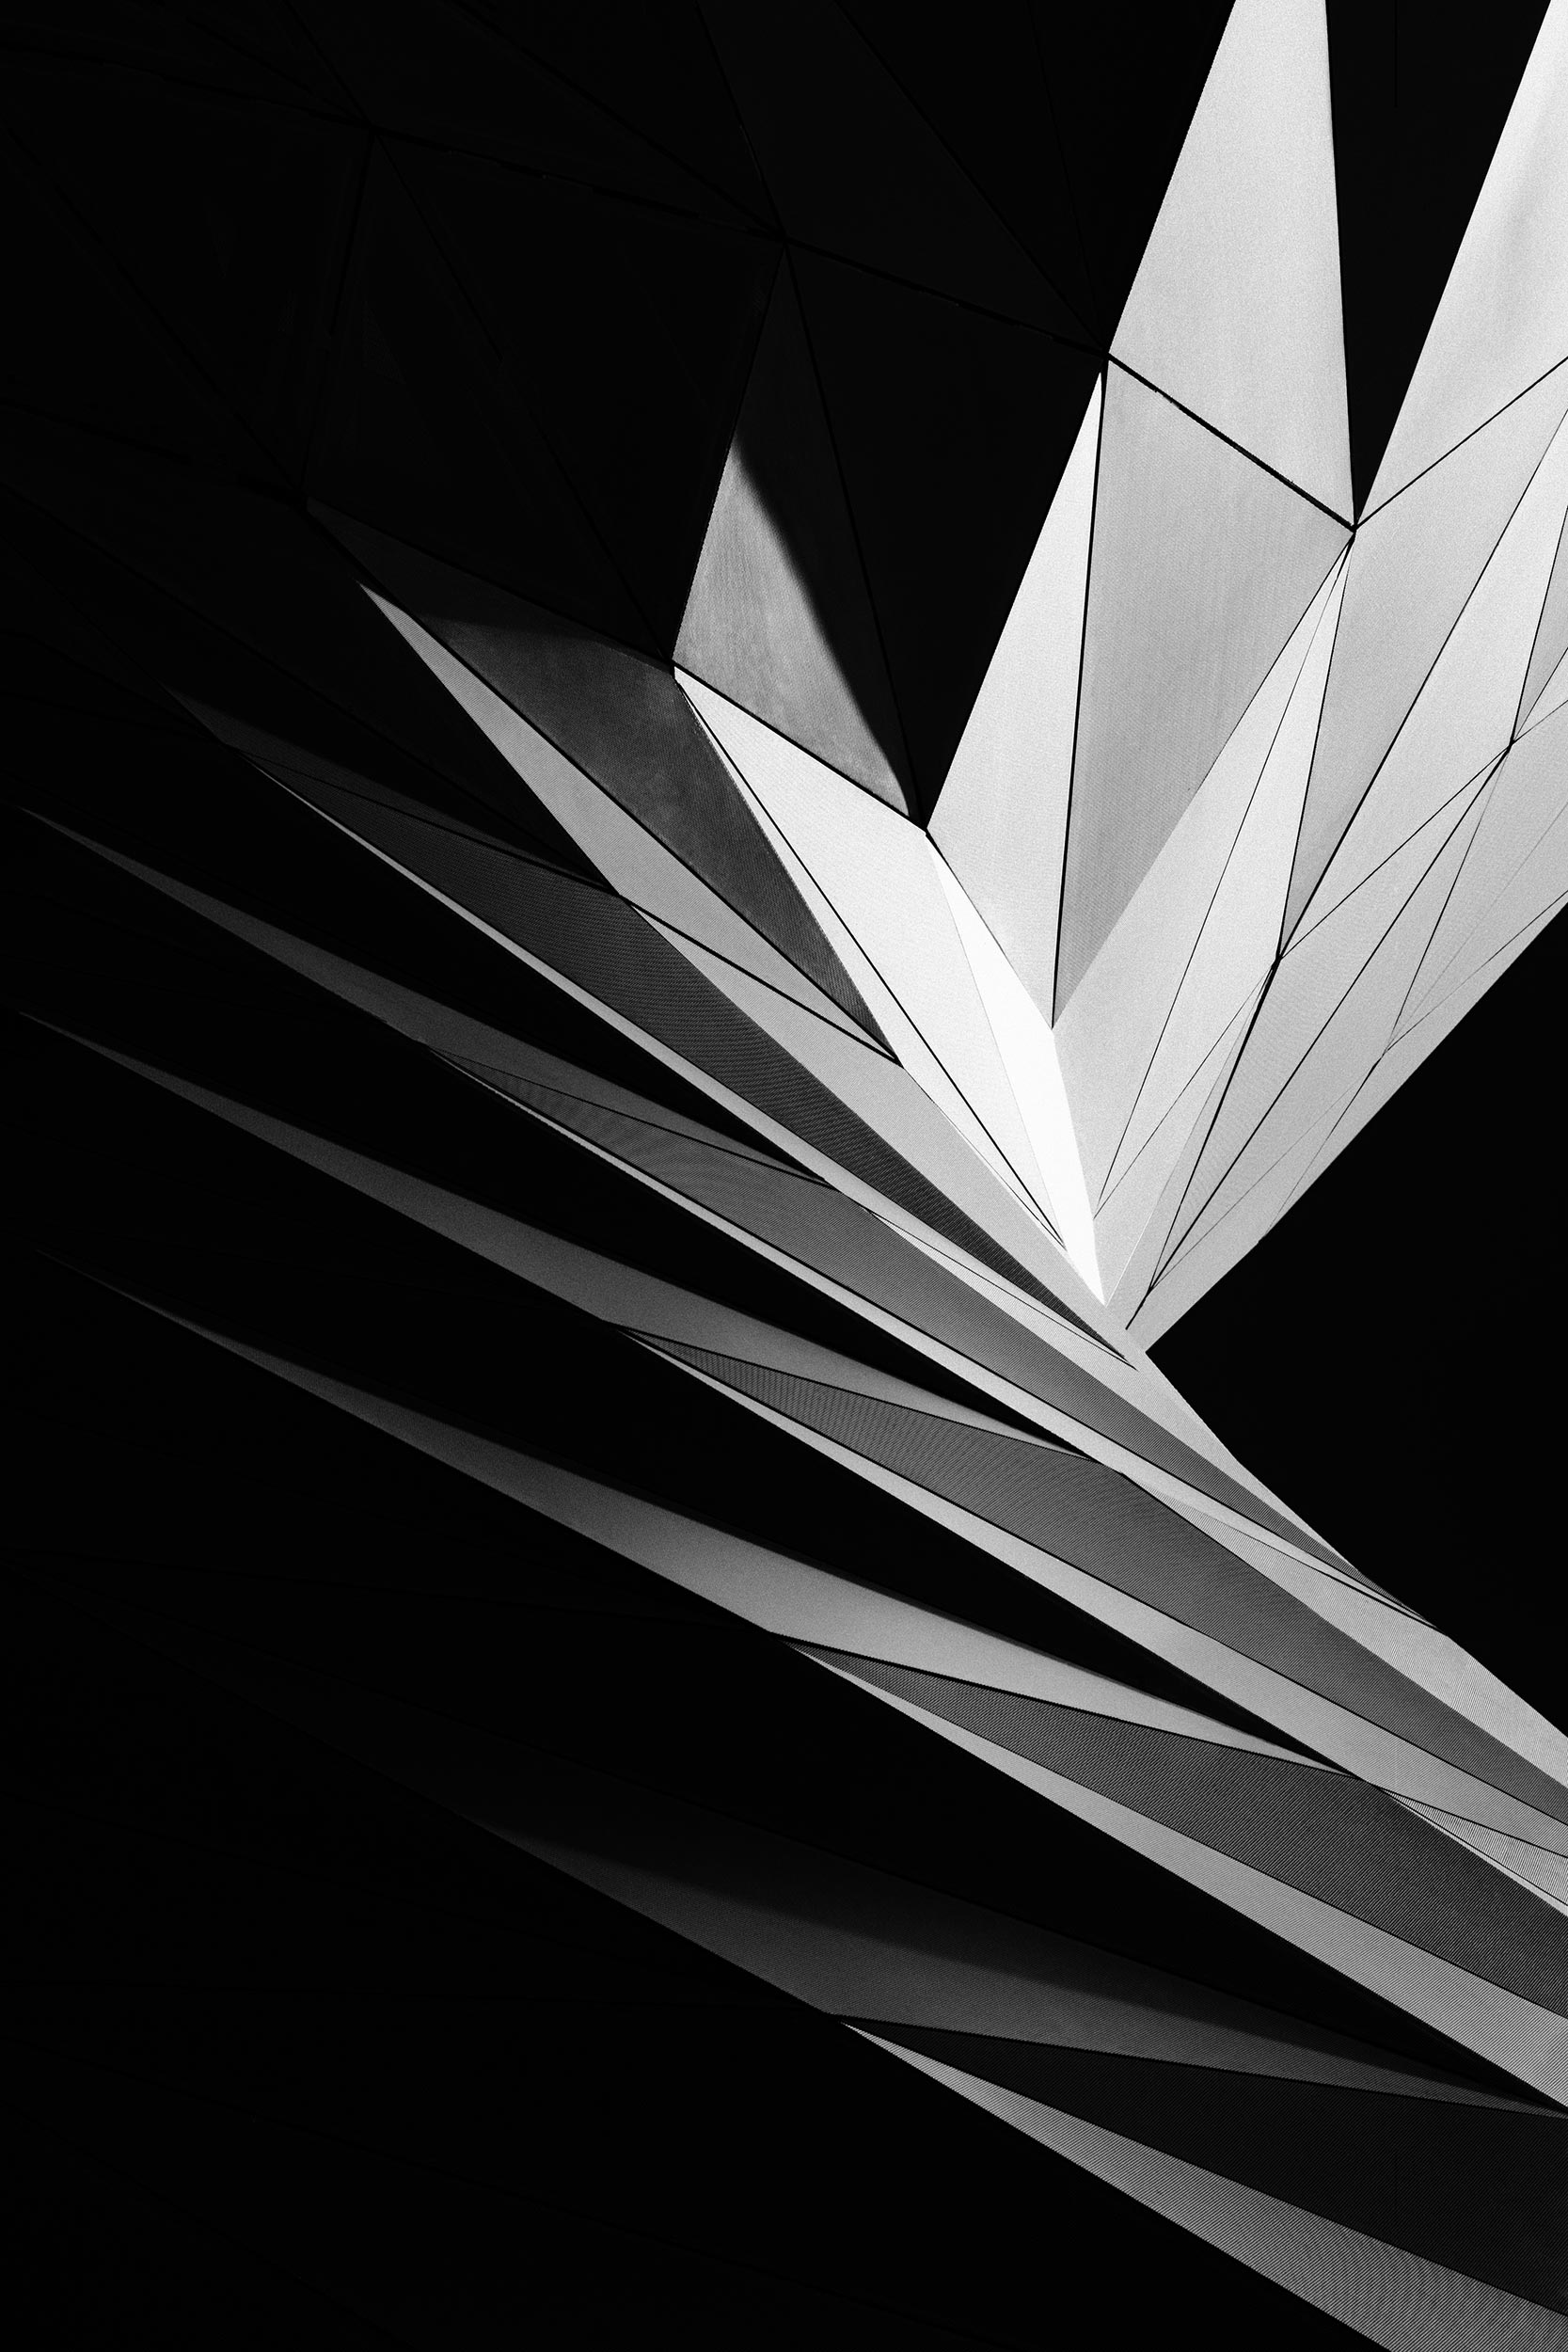 BMW World, Munich - Coop Himmelb(l)au - Black & White Fine Art Architecture Photography